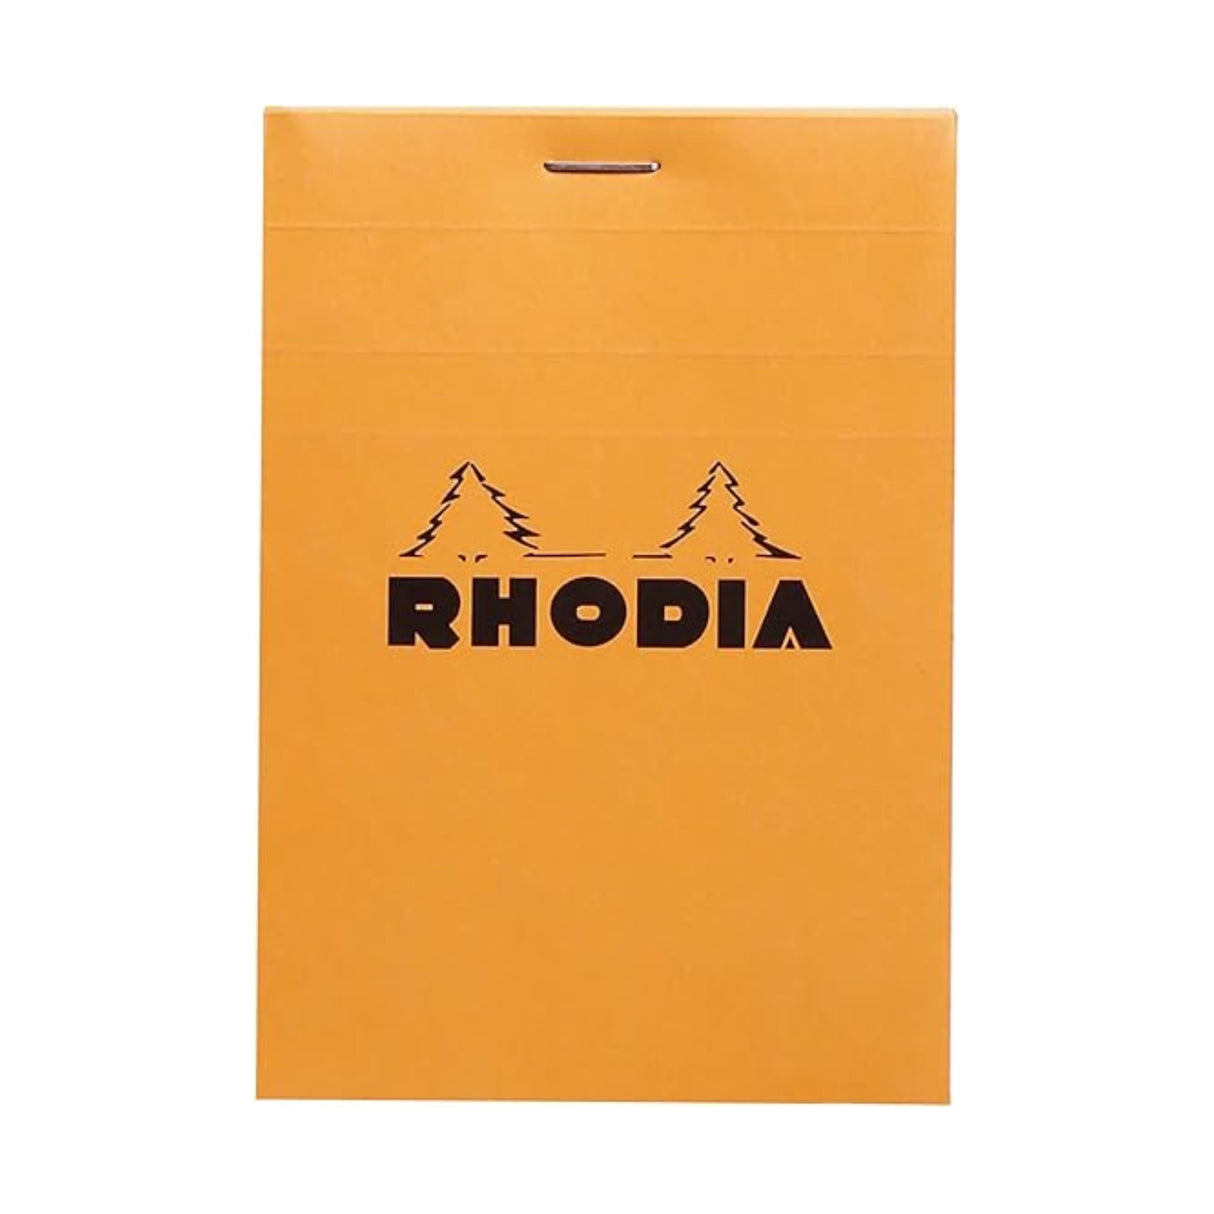 RHODIA ORANGE LINED NOTEPAD 3.3 X 4.7in (3 3/8 x 4 3/4)